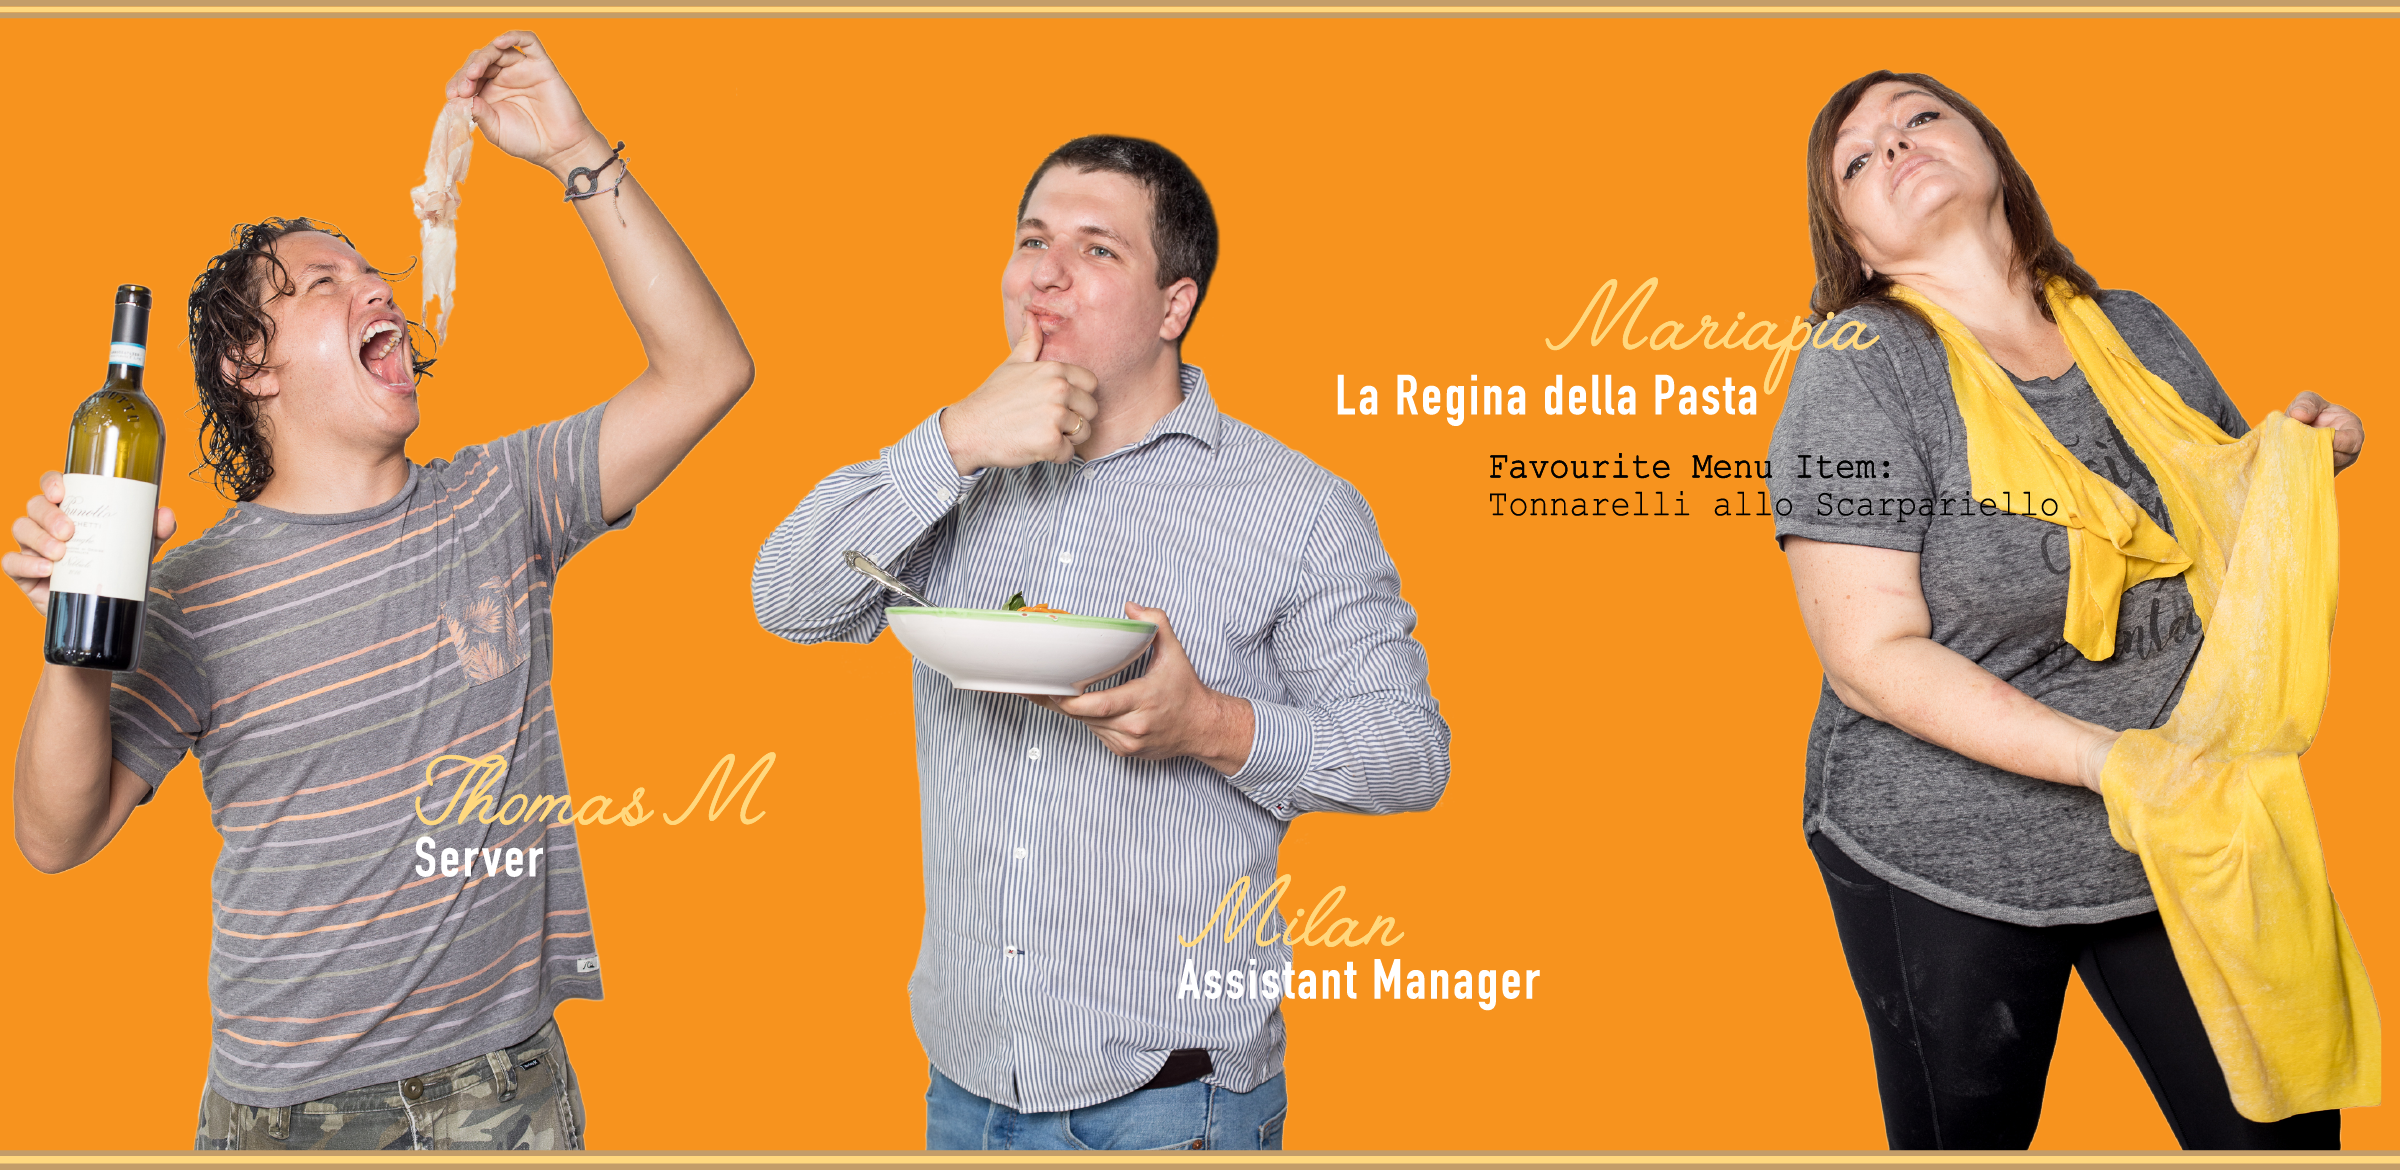 Thomas M (server), Milan (assistant manager), and Mariapia (la regina della pasta. favorite menu item: Tonnarelli allo Scarpariello) show off their favorite Cesarina dishes